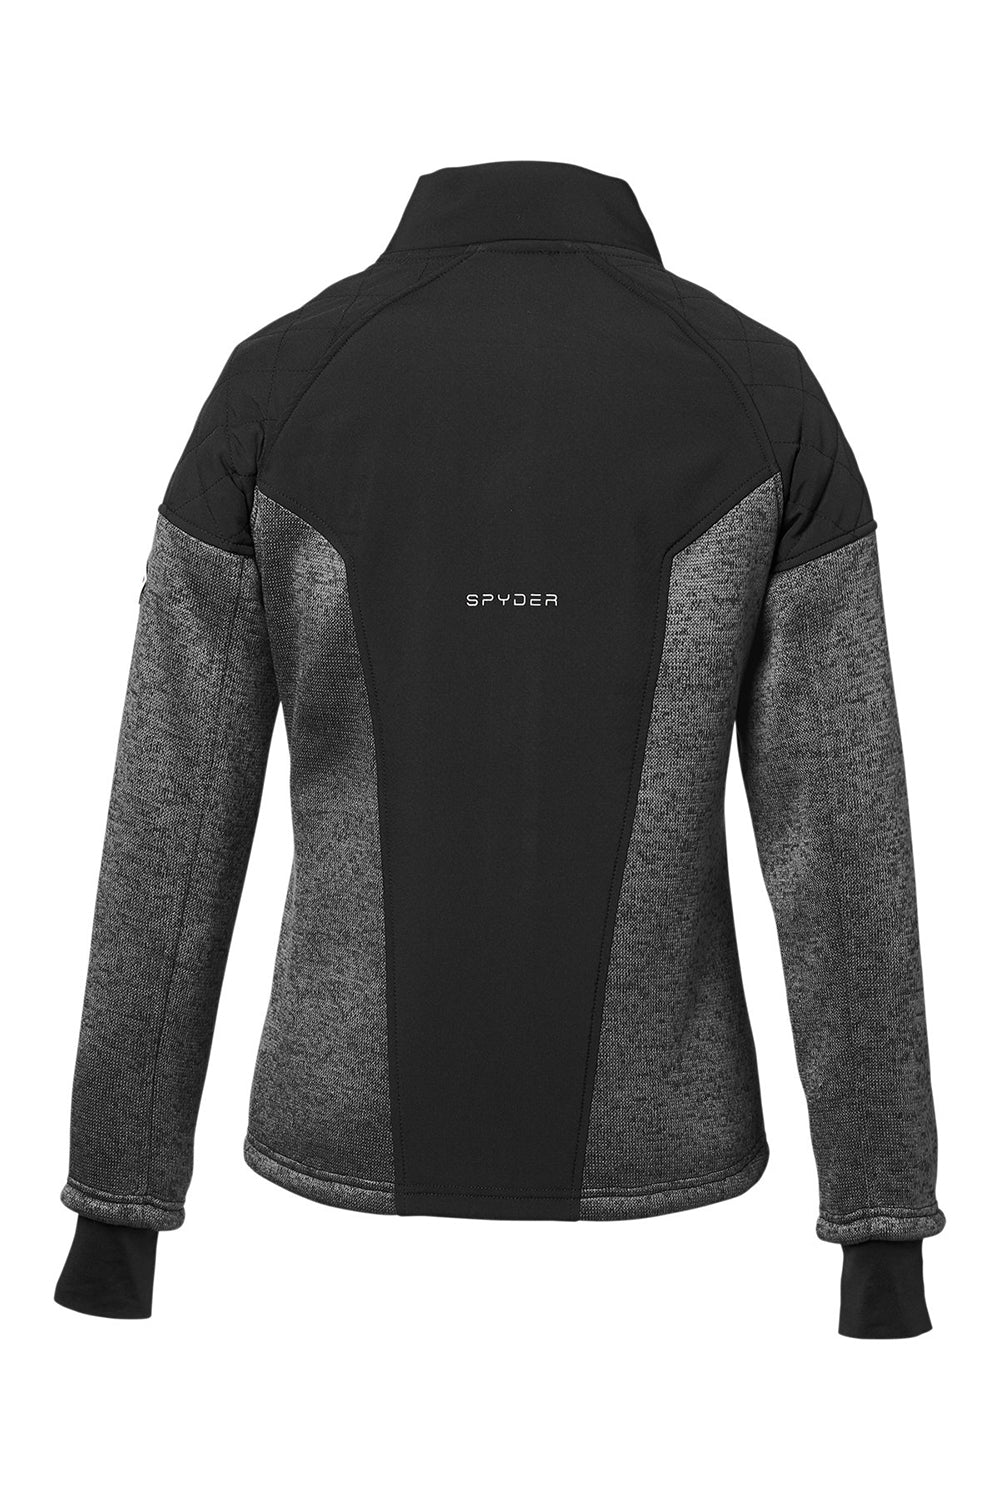 Spyder S17741 Womens Passage Full Zip Sweater Jacket Polar Grey Powder/Black Flat Back